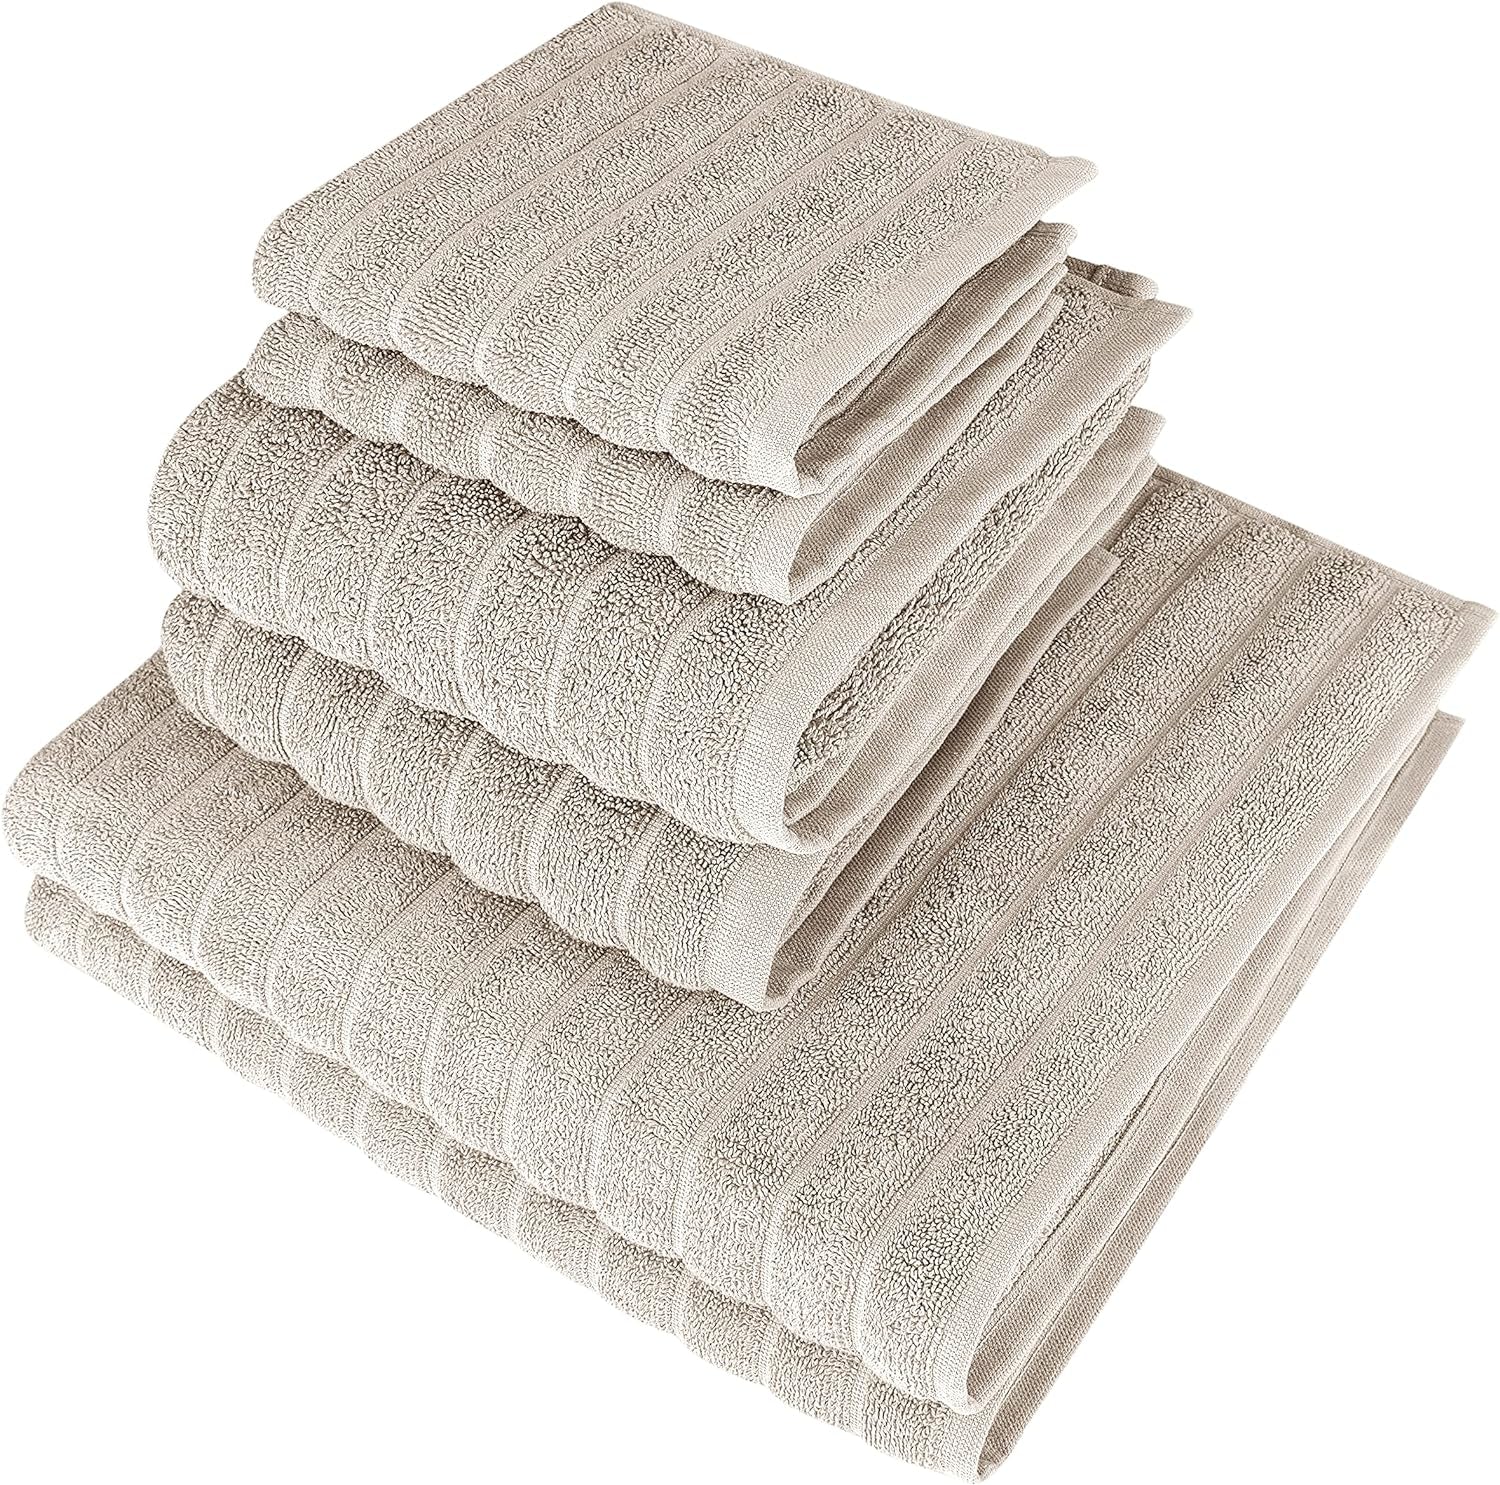 Luxury 6 Piece Towel Set - 2 Bath Towels, 2 Hand Towels, 2 Washcloths, Jacquard Ribbed, Absorbent, 100% Turkish Cotton (Almond Beige)